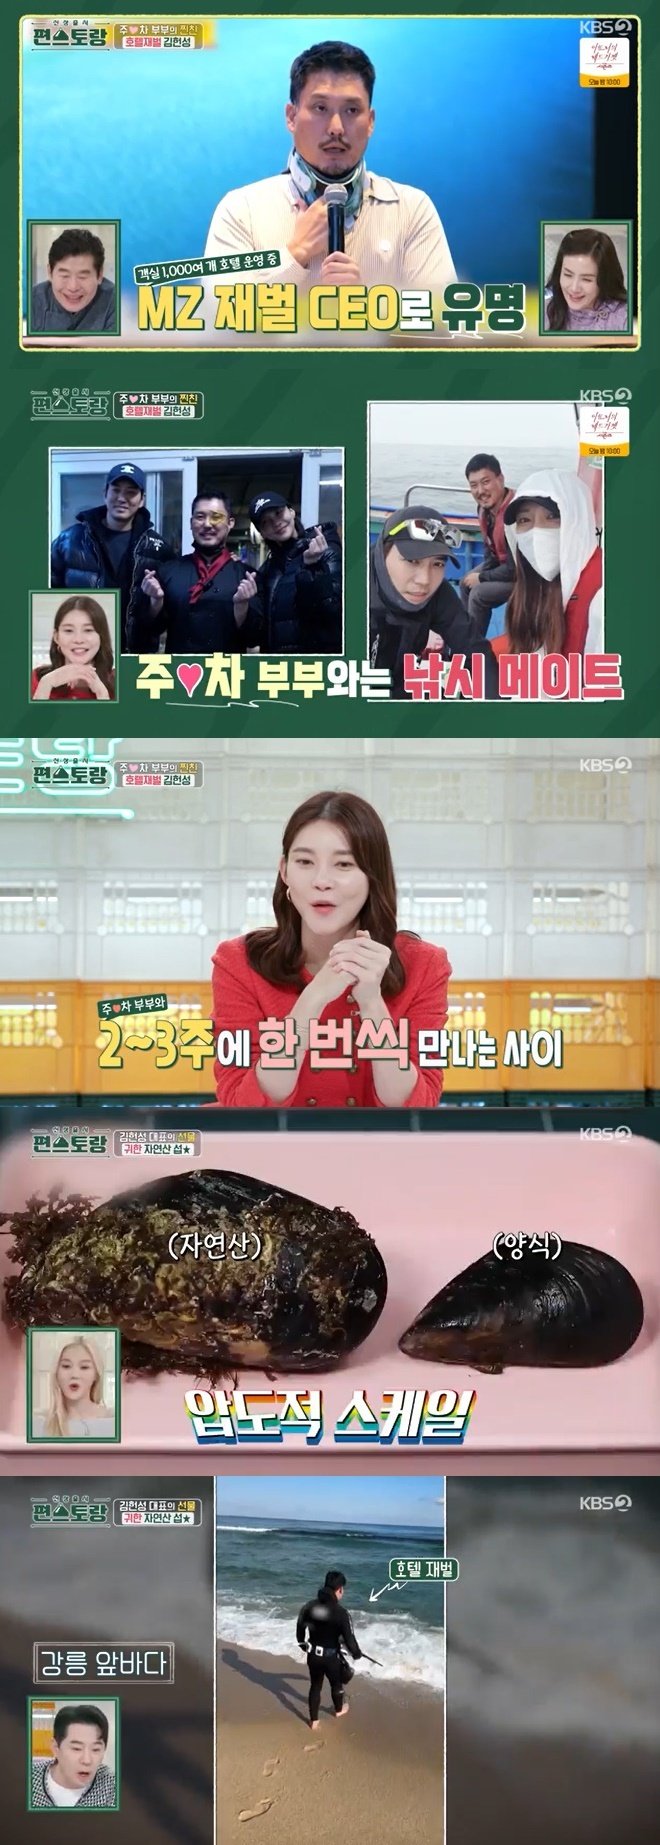 KBS 2TV '신상출시 편스토랑' 캡처